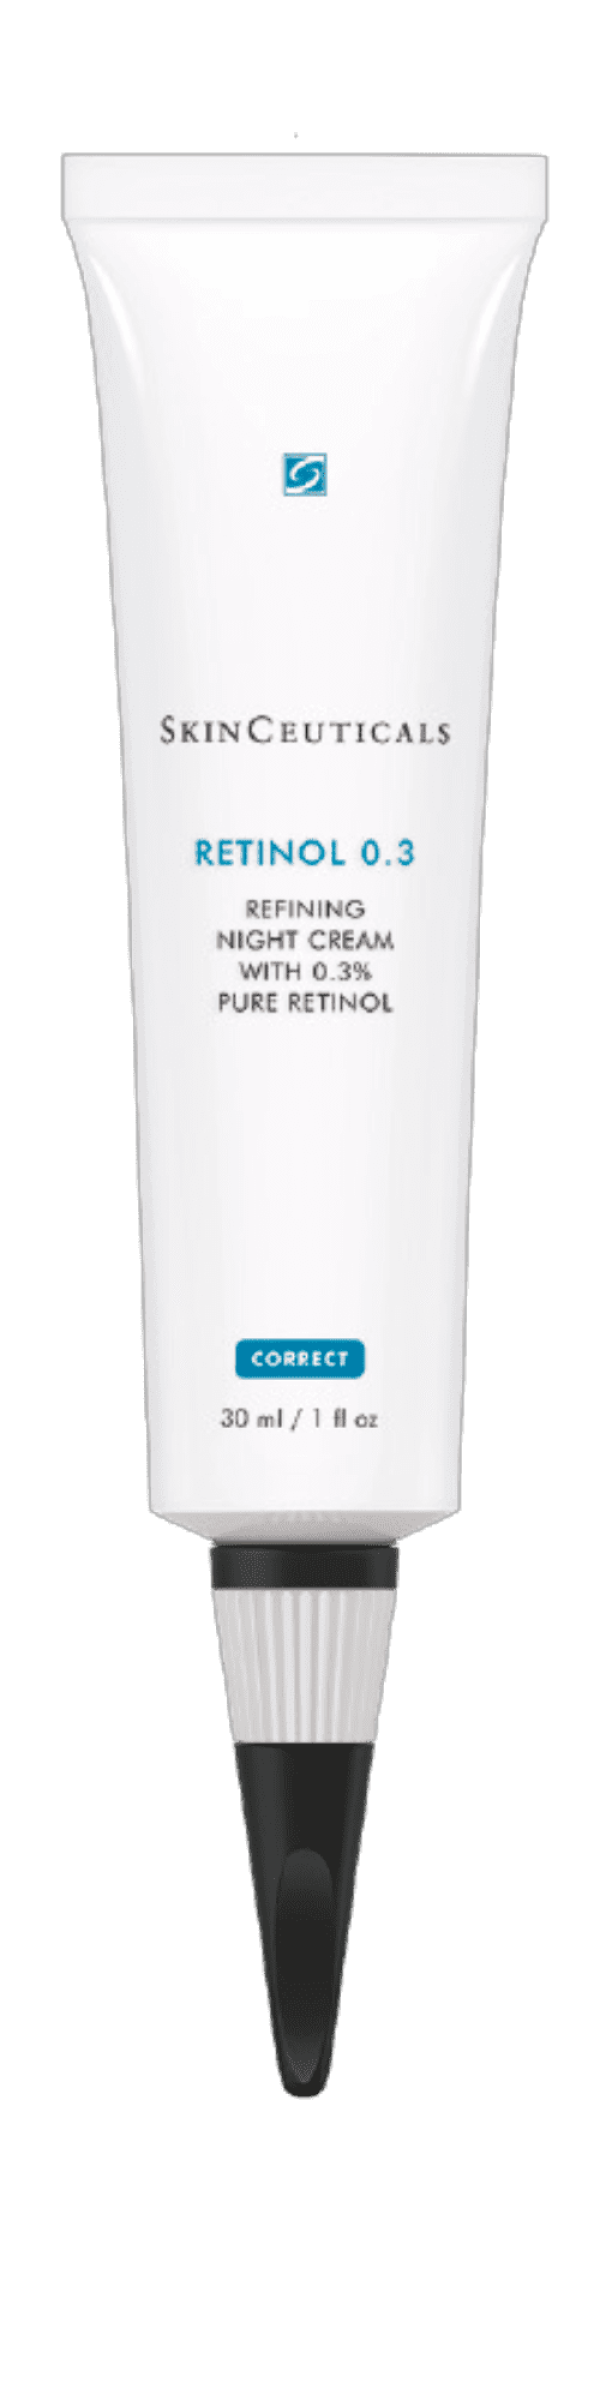 Retinol 0.3 Refining Night Cream